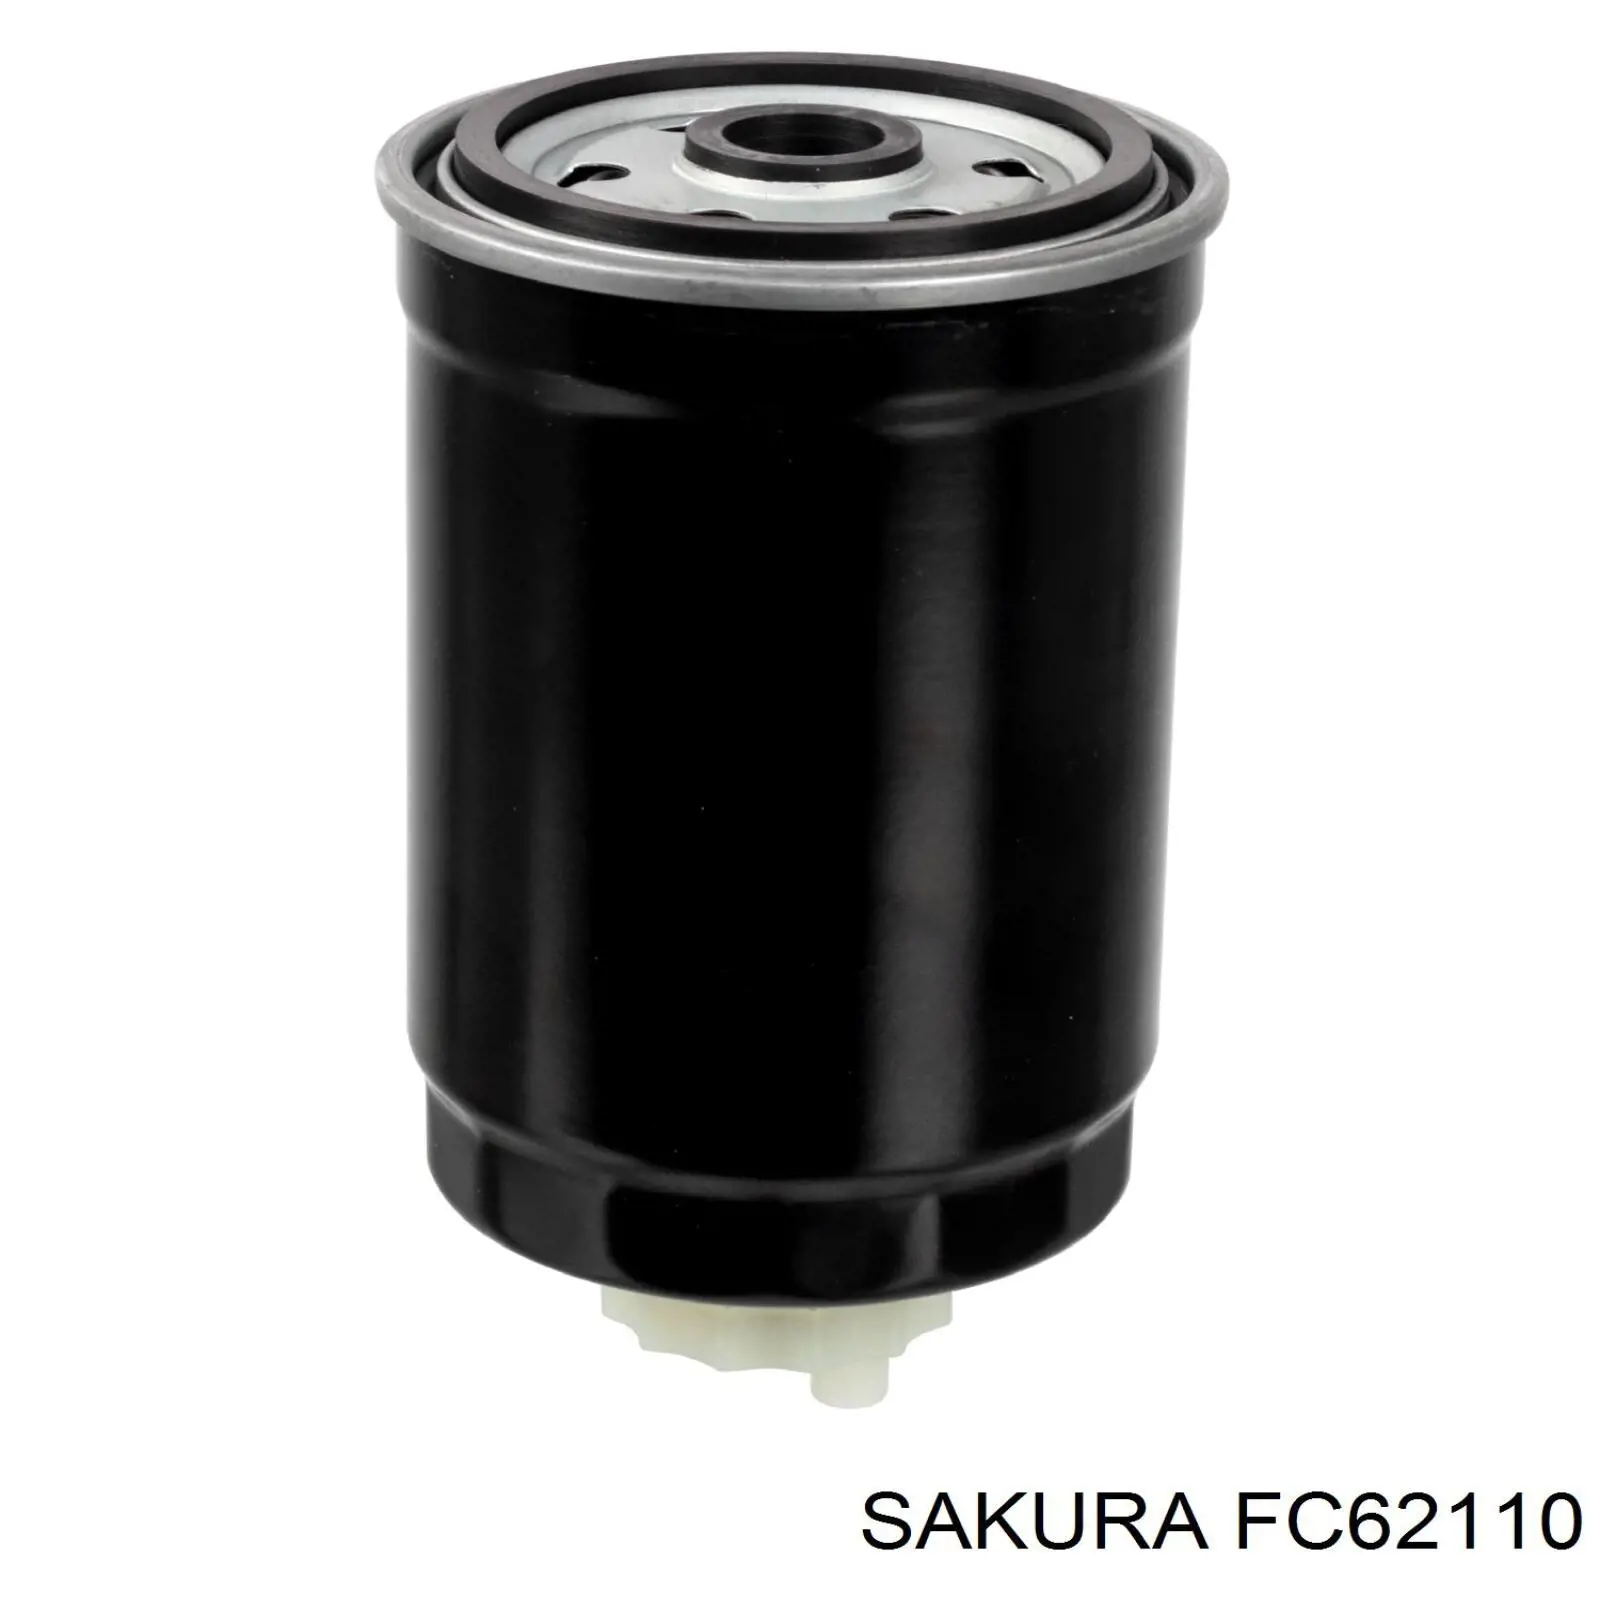 FC62110 Sakura filtro combustible